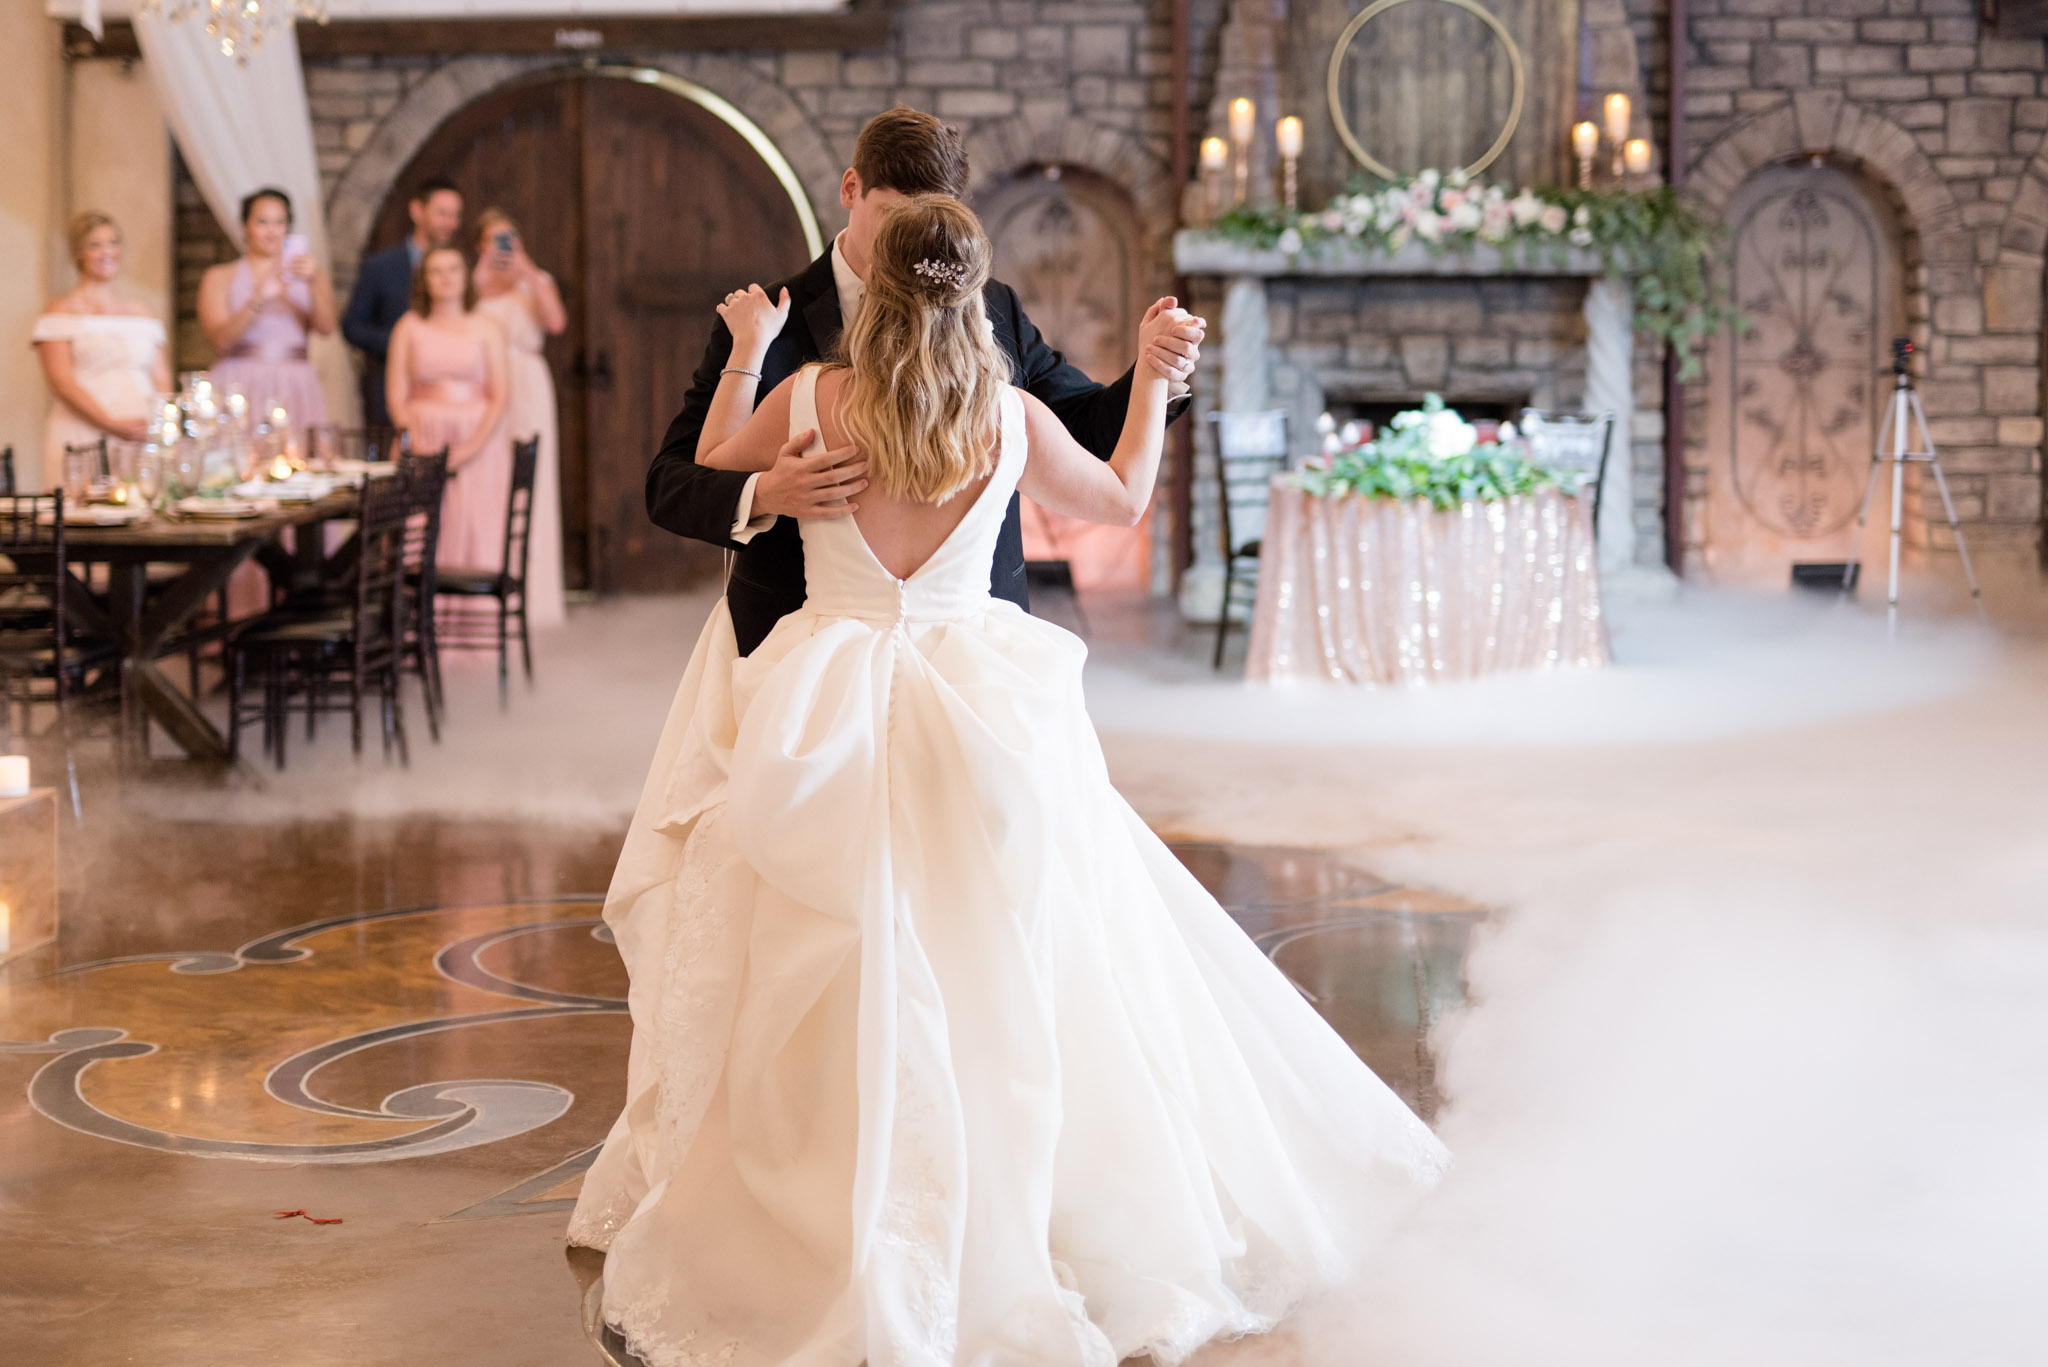 Bride and groom dance with fog on floor.